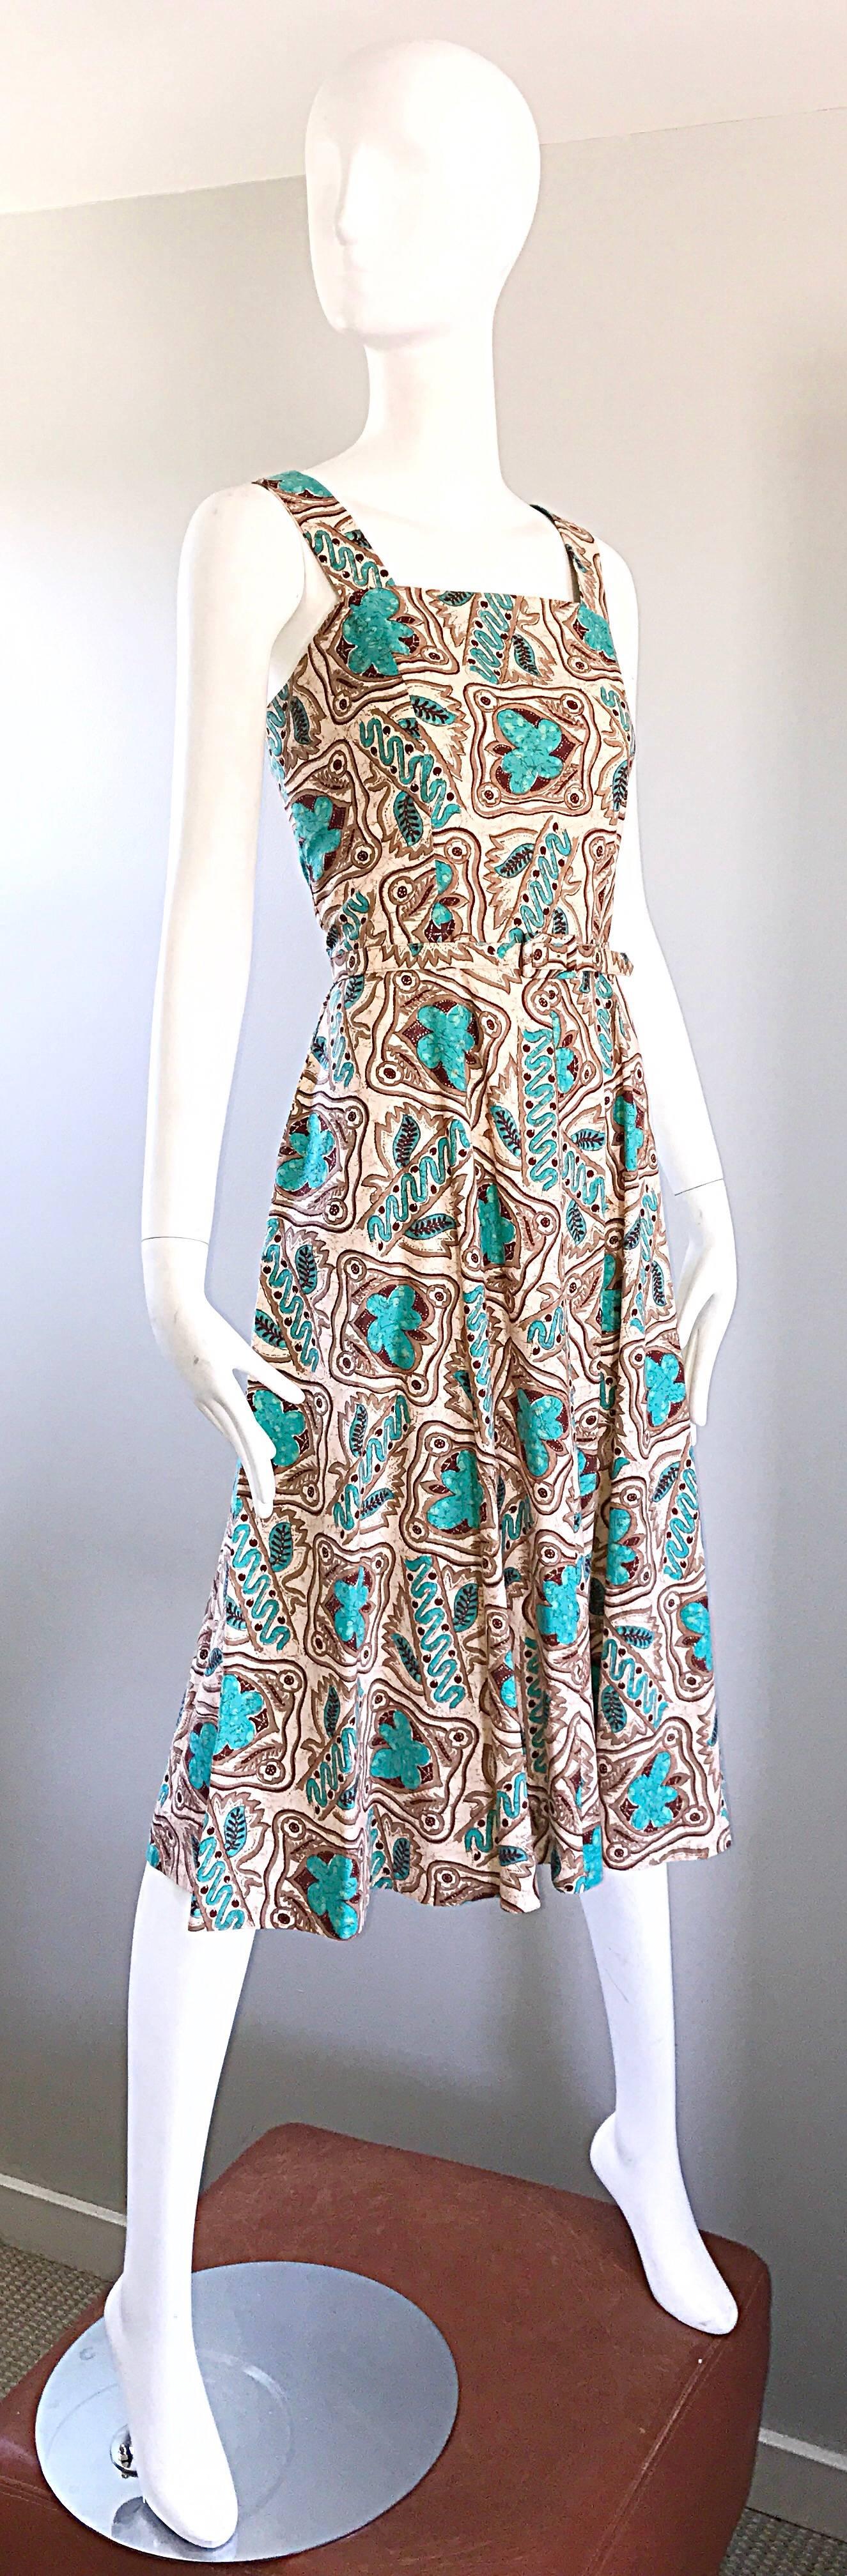 Wonderful 1950s Batik Print Teal & Brown Fit and Flare Belted Vintage 50s Dress 3